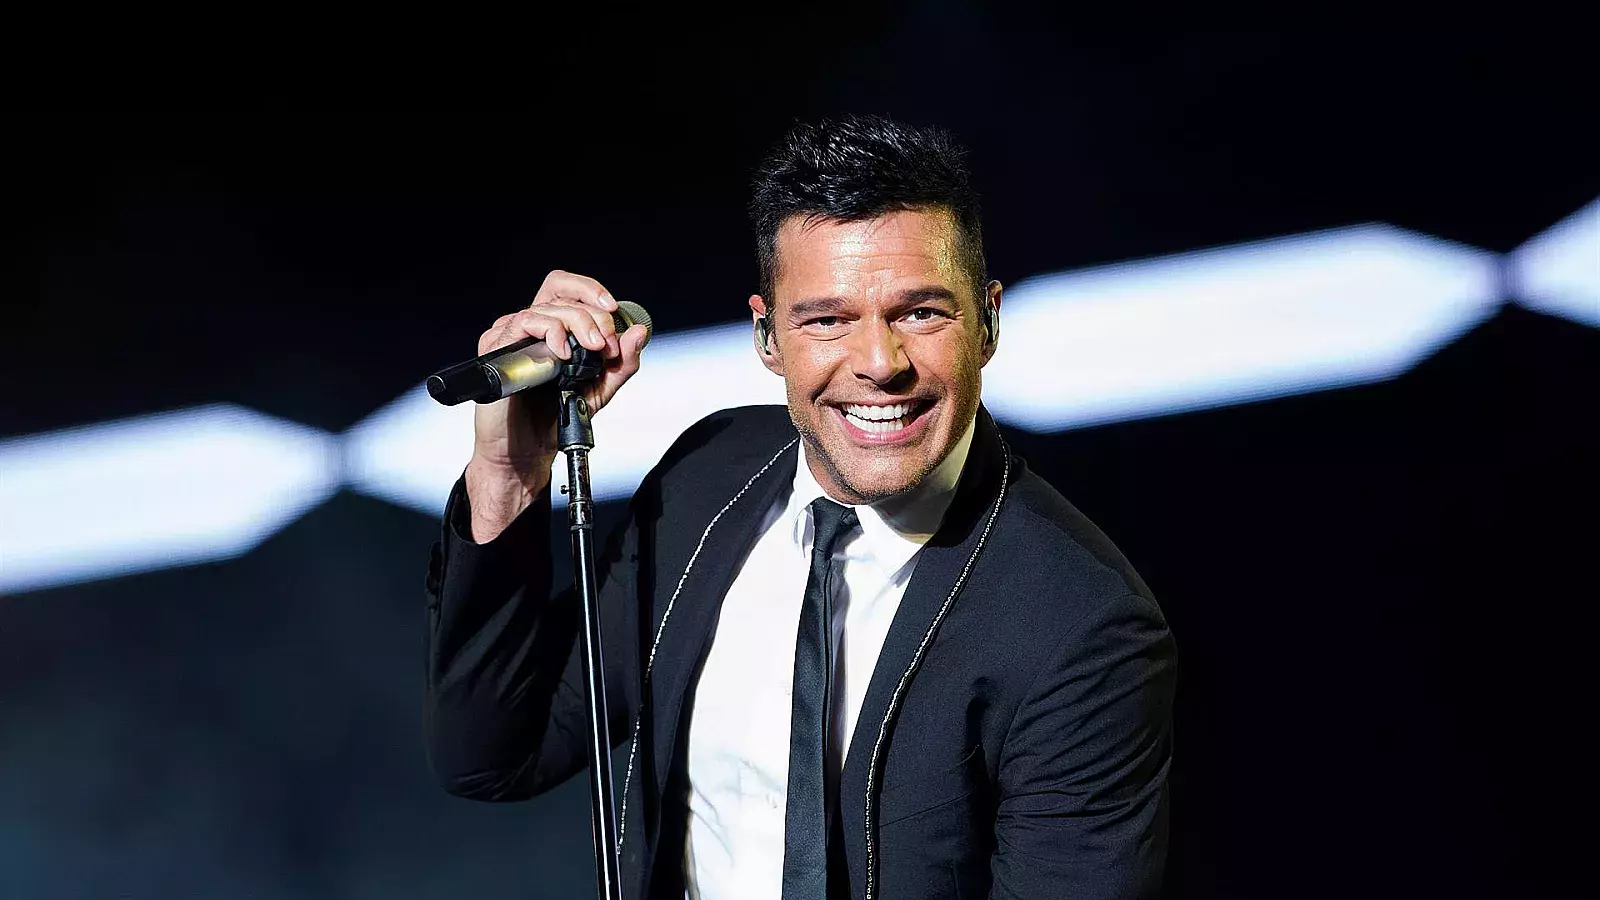 Sobrino de Ricky Martin retirará demanda contra el cantante